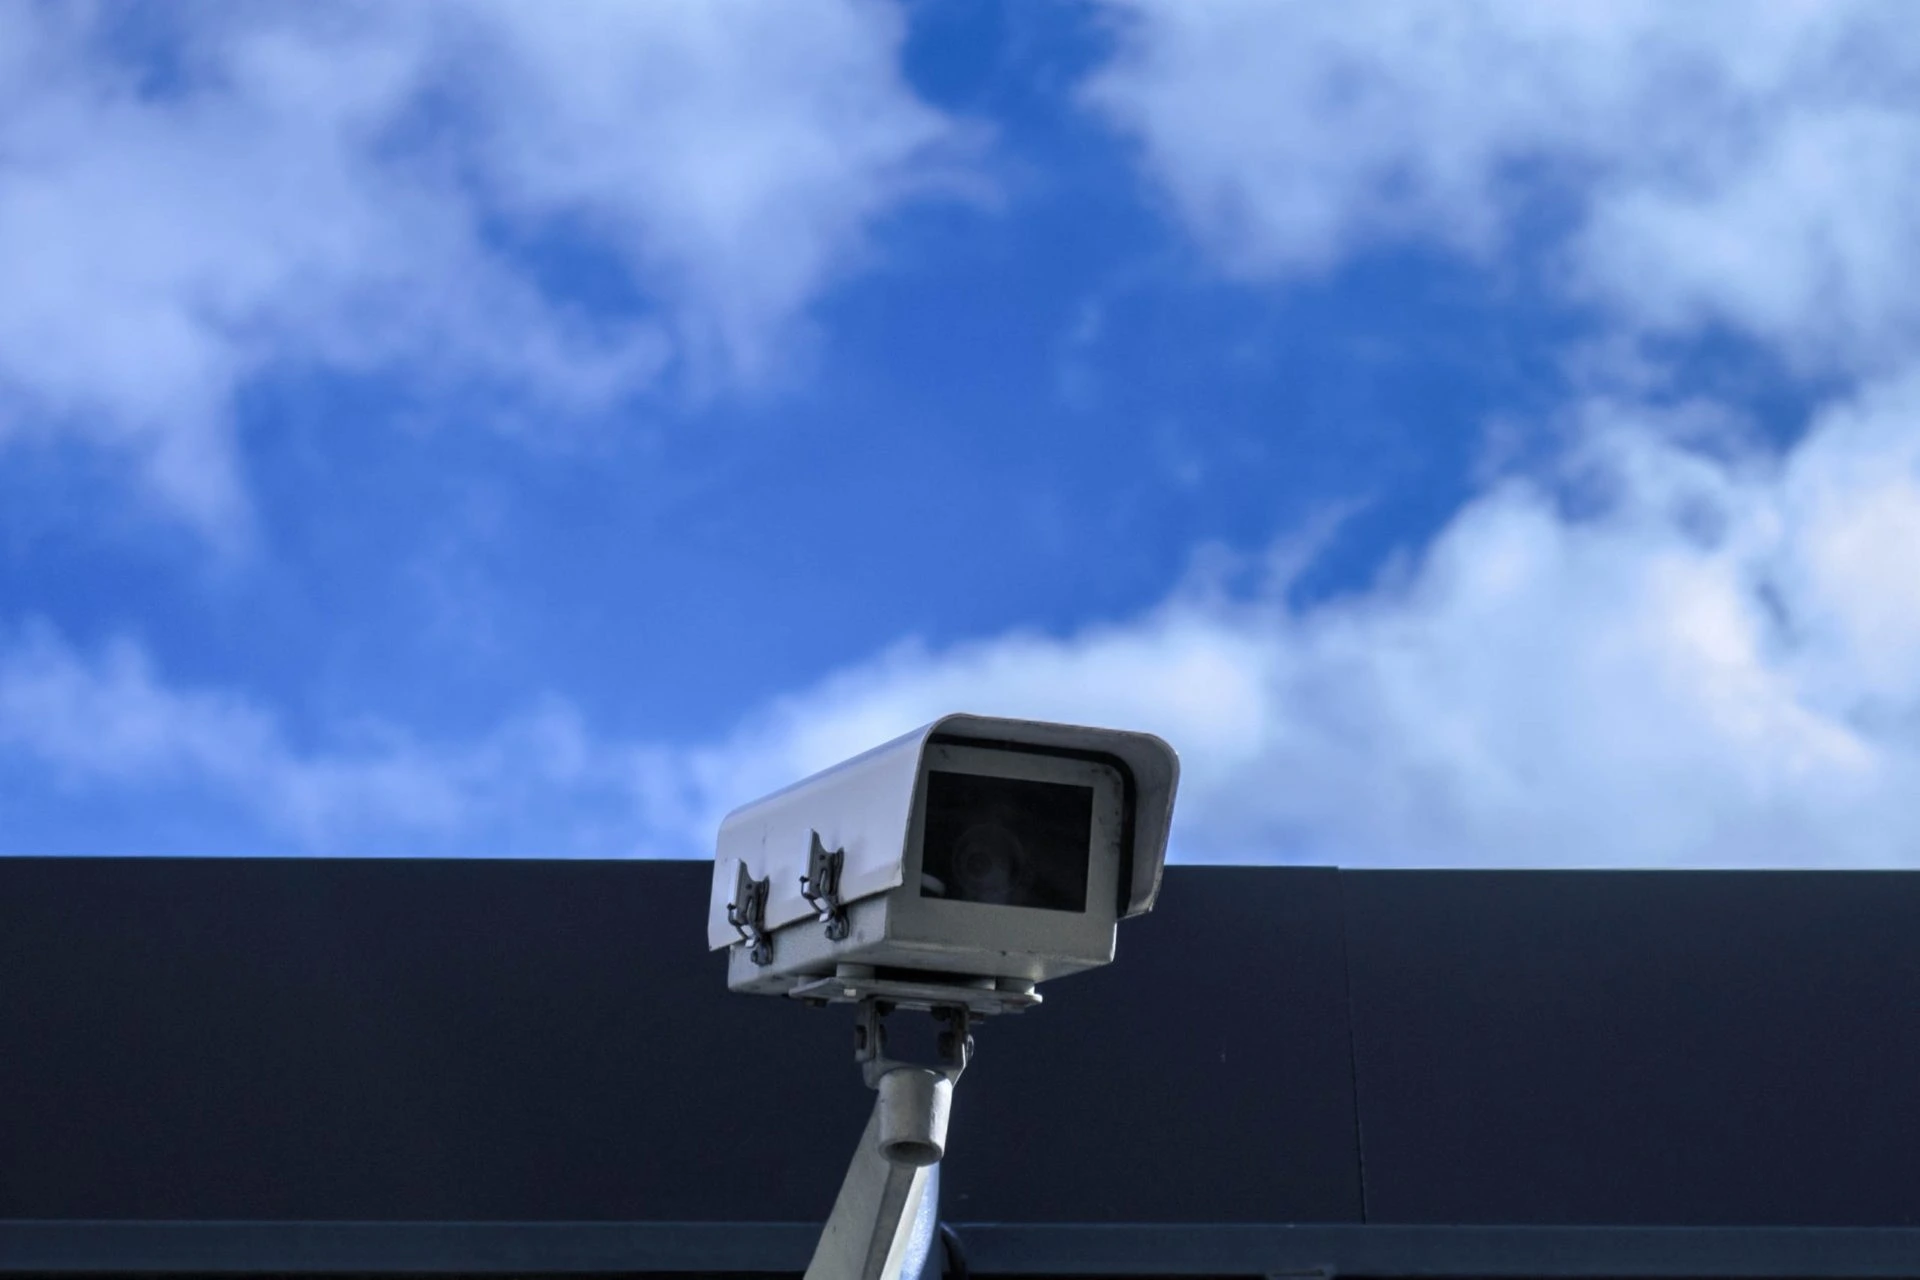 Free guide - CCTV FAQ: A Buyer’s Guide